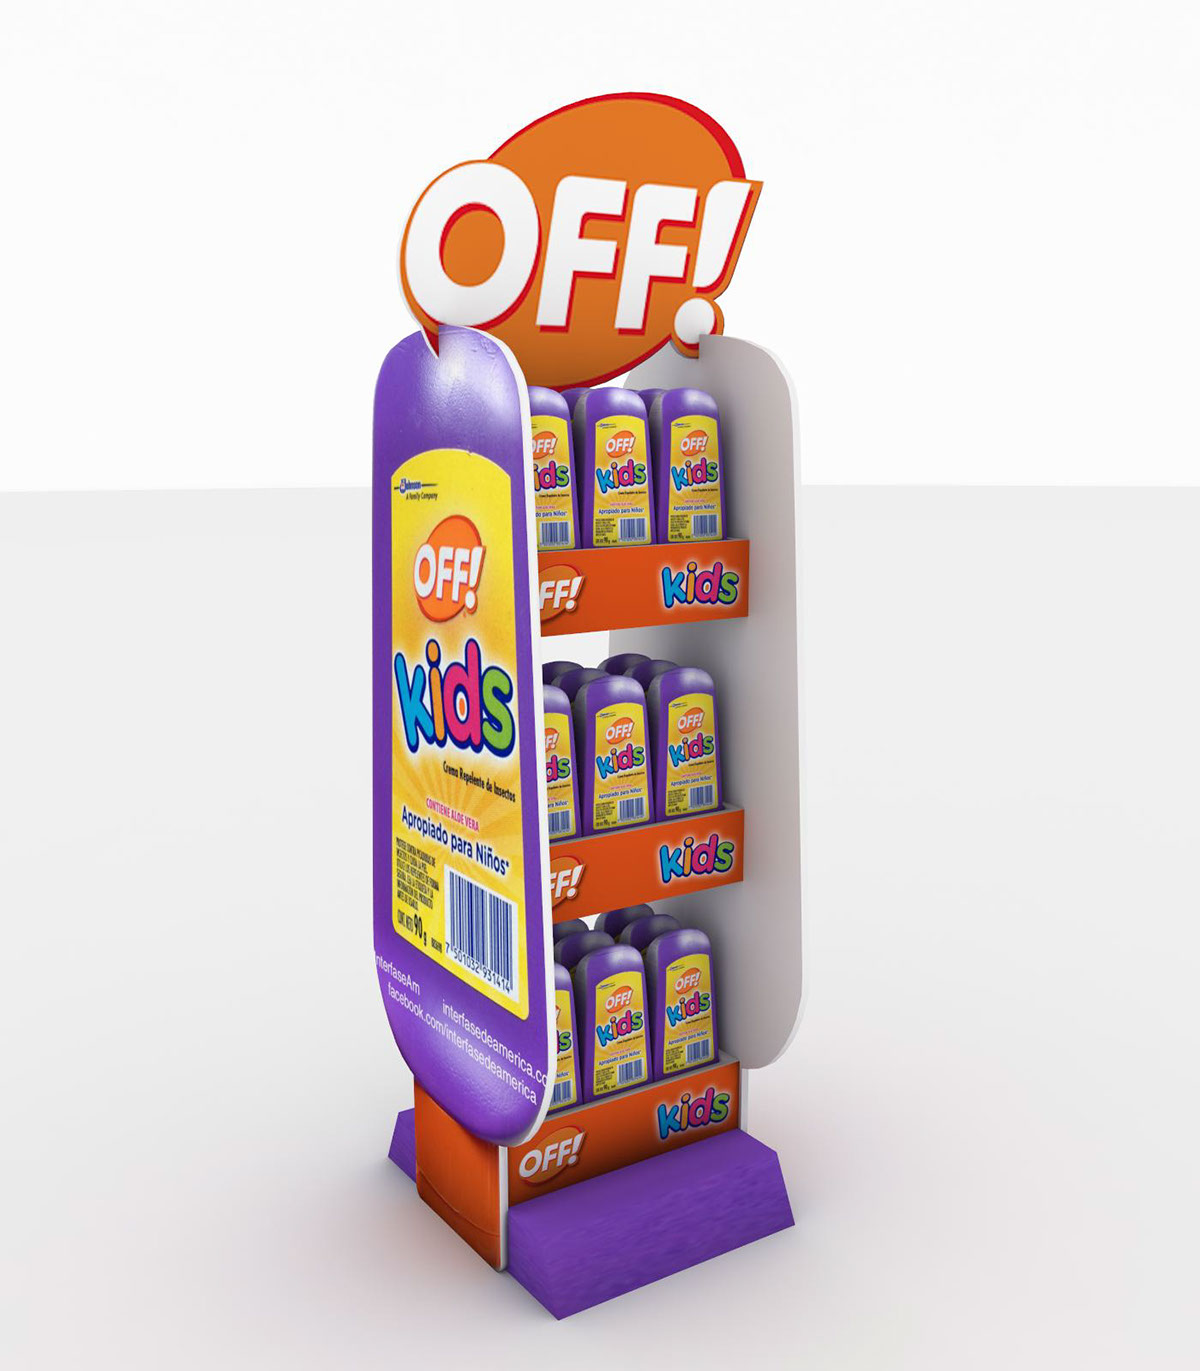 off pop off pop OFF Repelente repelente Stand dispenser off dispenser